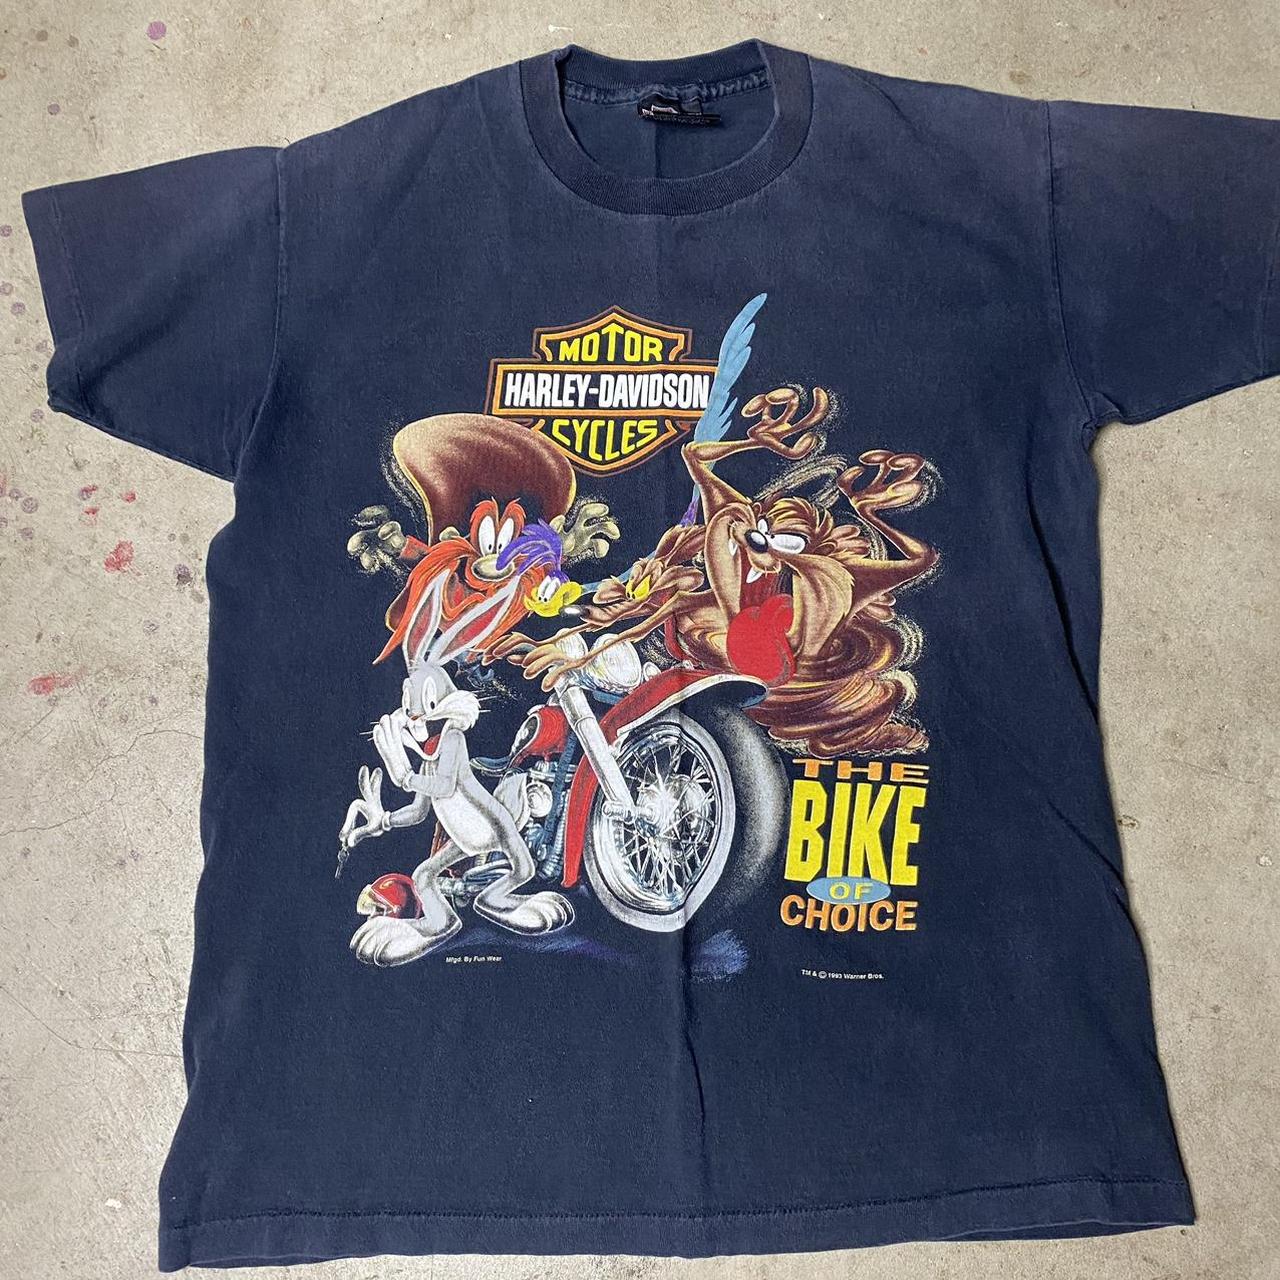 Vintage 1993 Looney Tunes Harley Davidson t shirt.